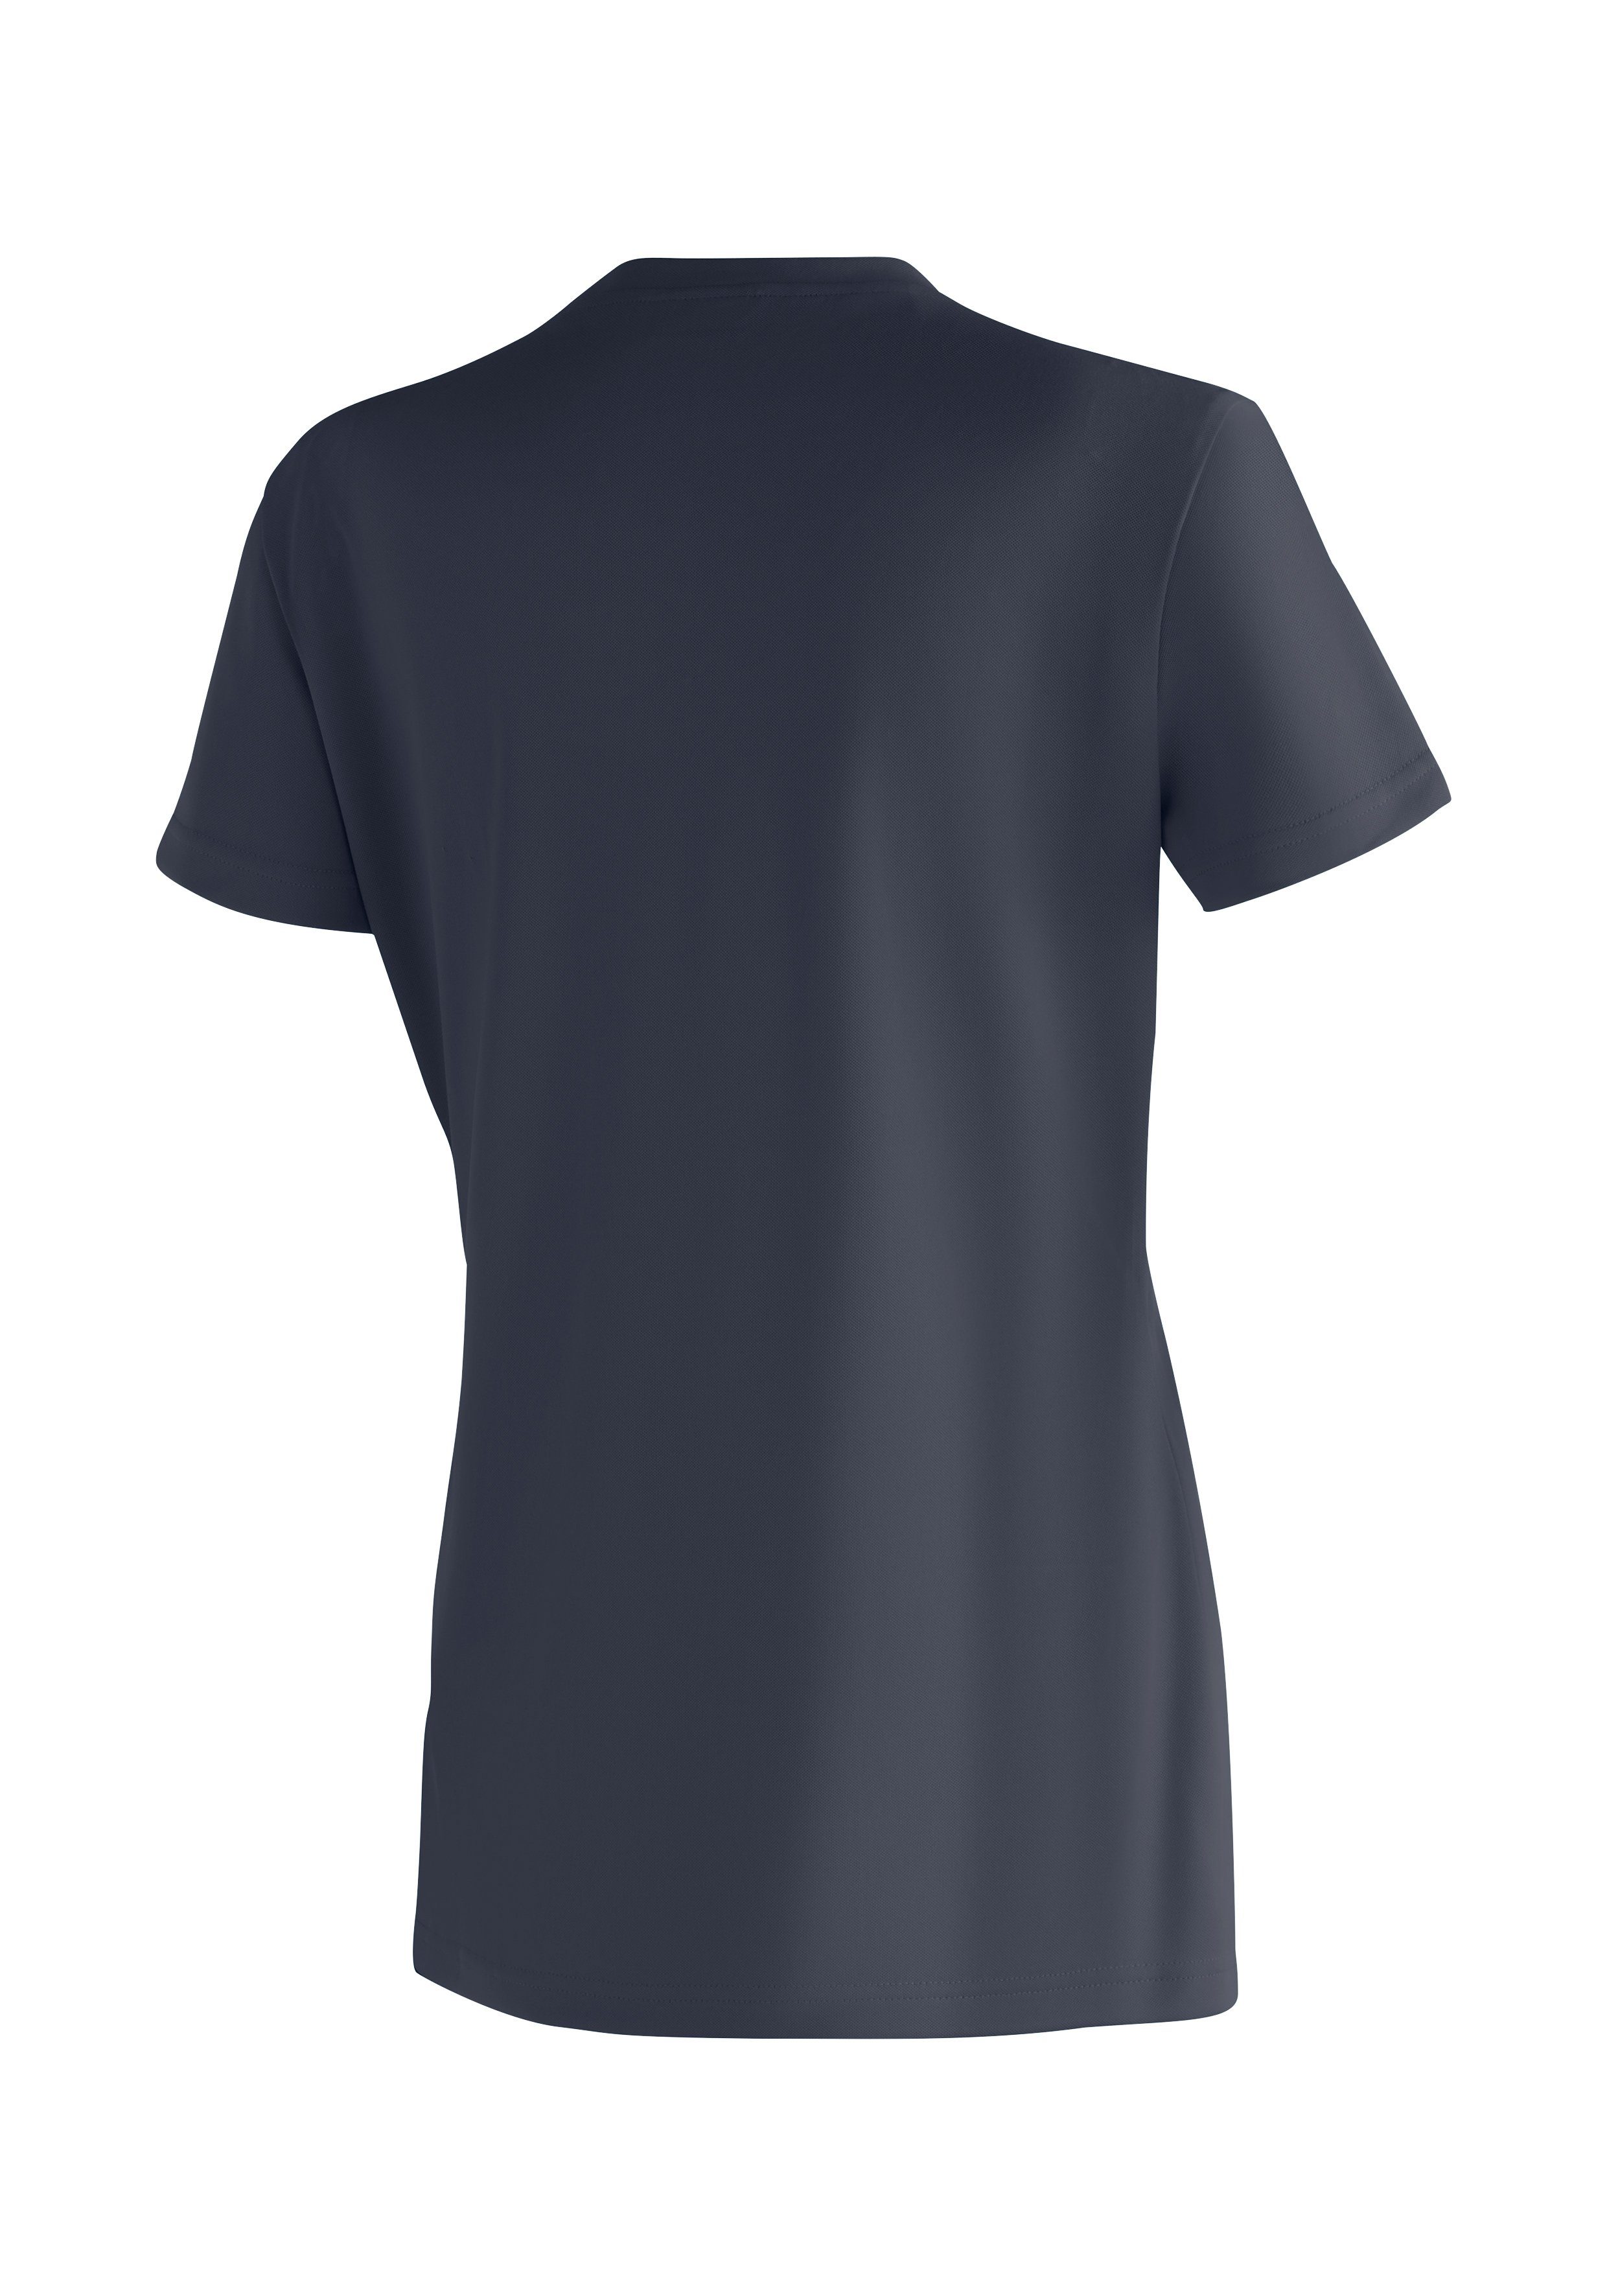 Funktionsshirt Maier Passformstabilität dunkelblau Print Funktional T-Shirt mit vielseitiges Sports hoher Waltraut